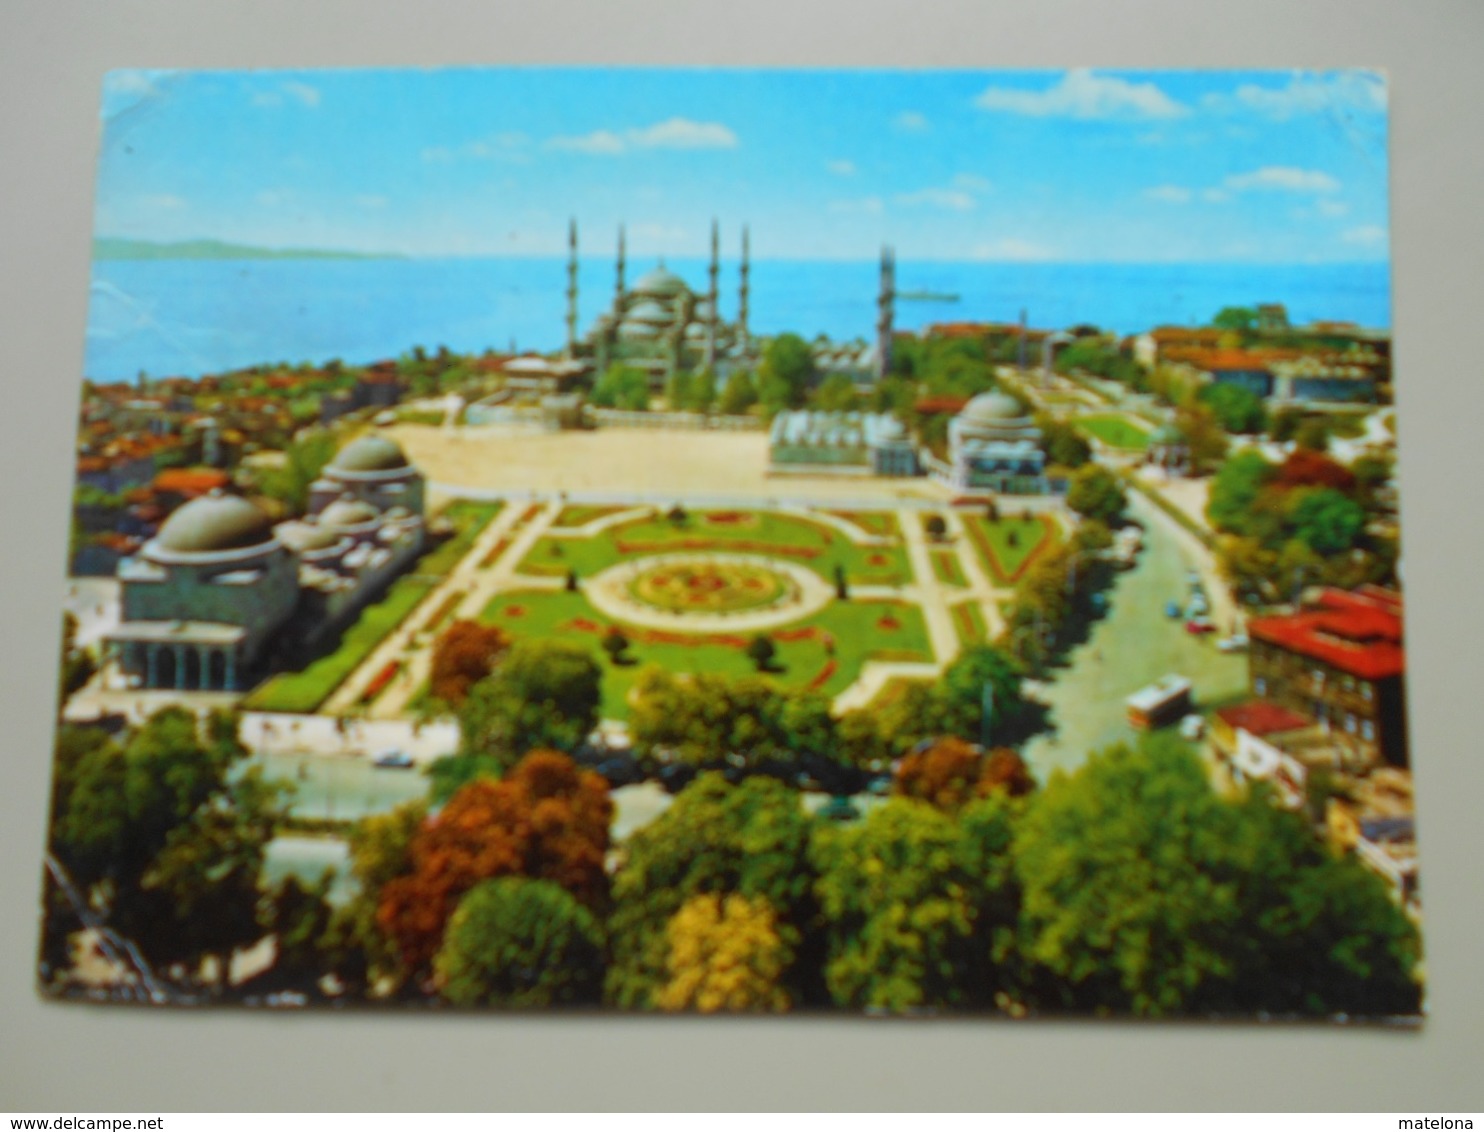 TURQUIEISTANBUL THE BLUE MOSQUE SULTAN AHMET MOSQUE AND IT'S SURROUNDING - Turquie